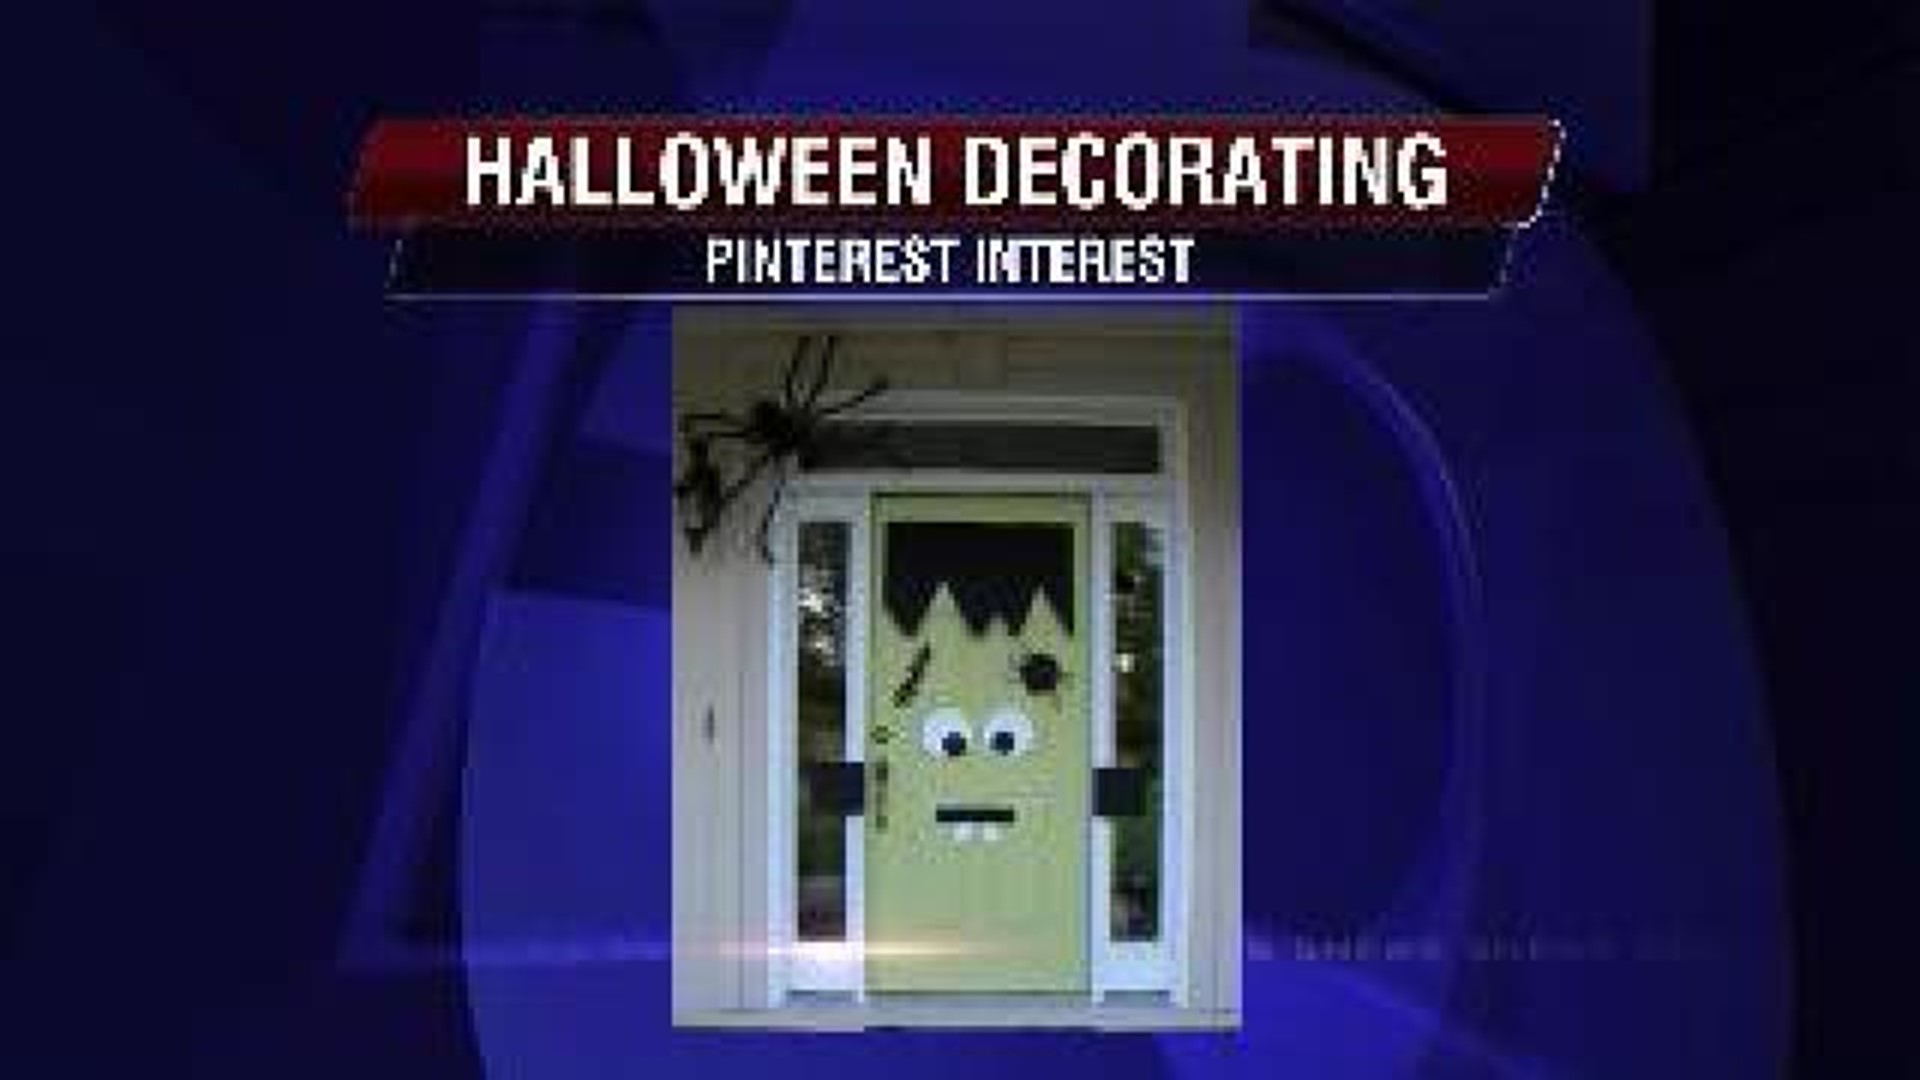 Pinterest Interest: Halloween Decorations